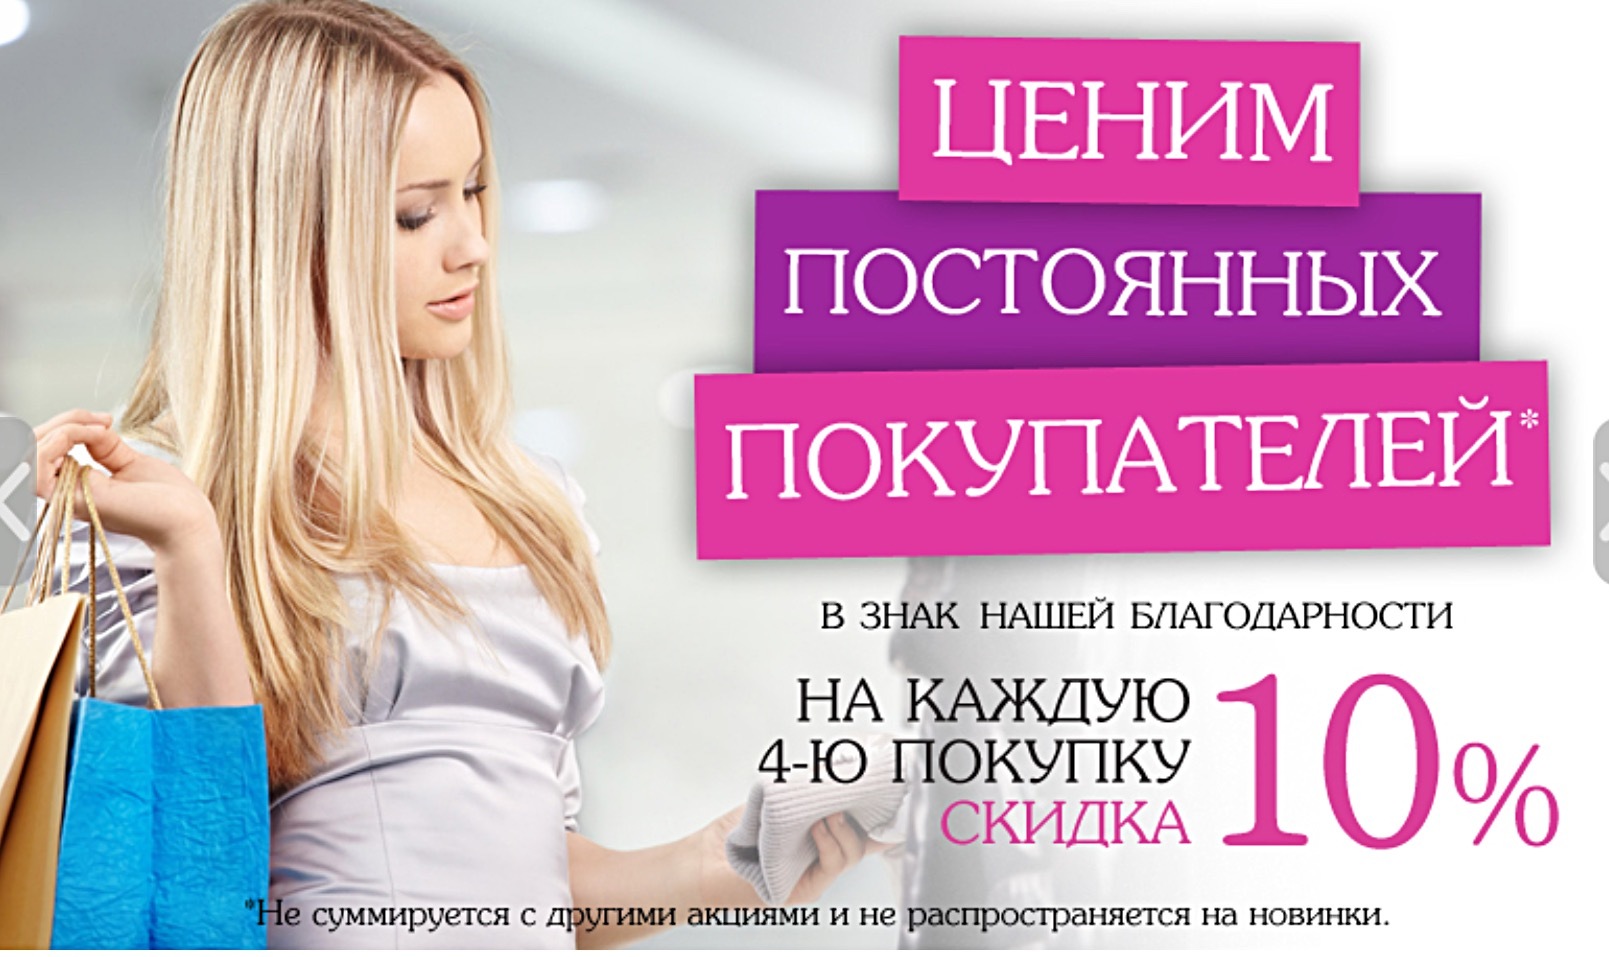 Реклама интернет магазина одежды